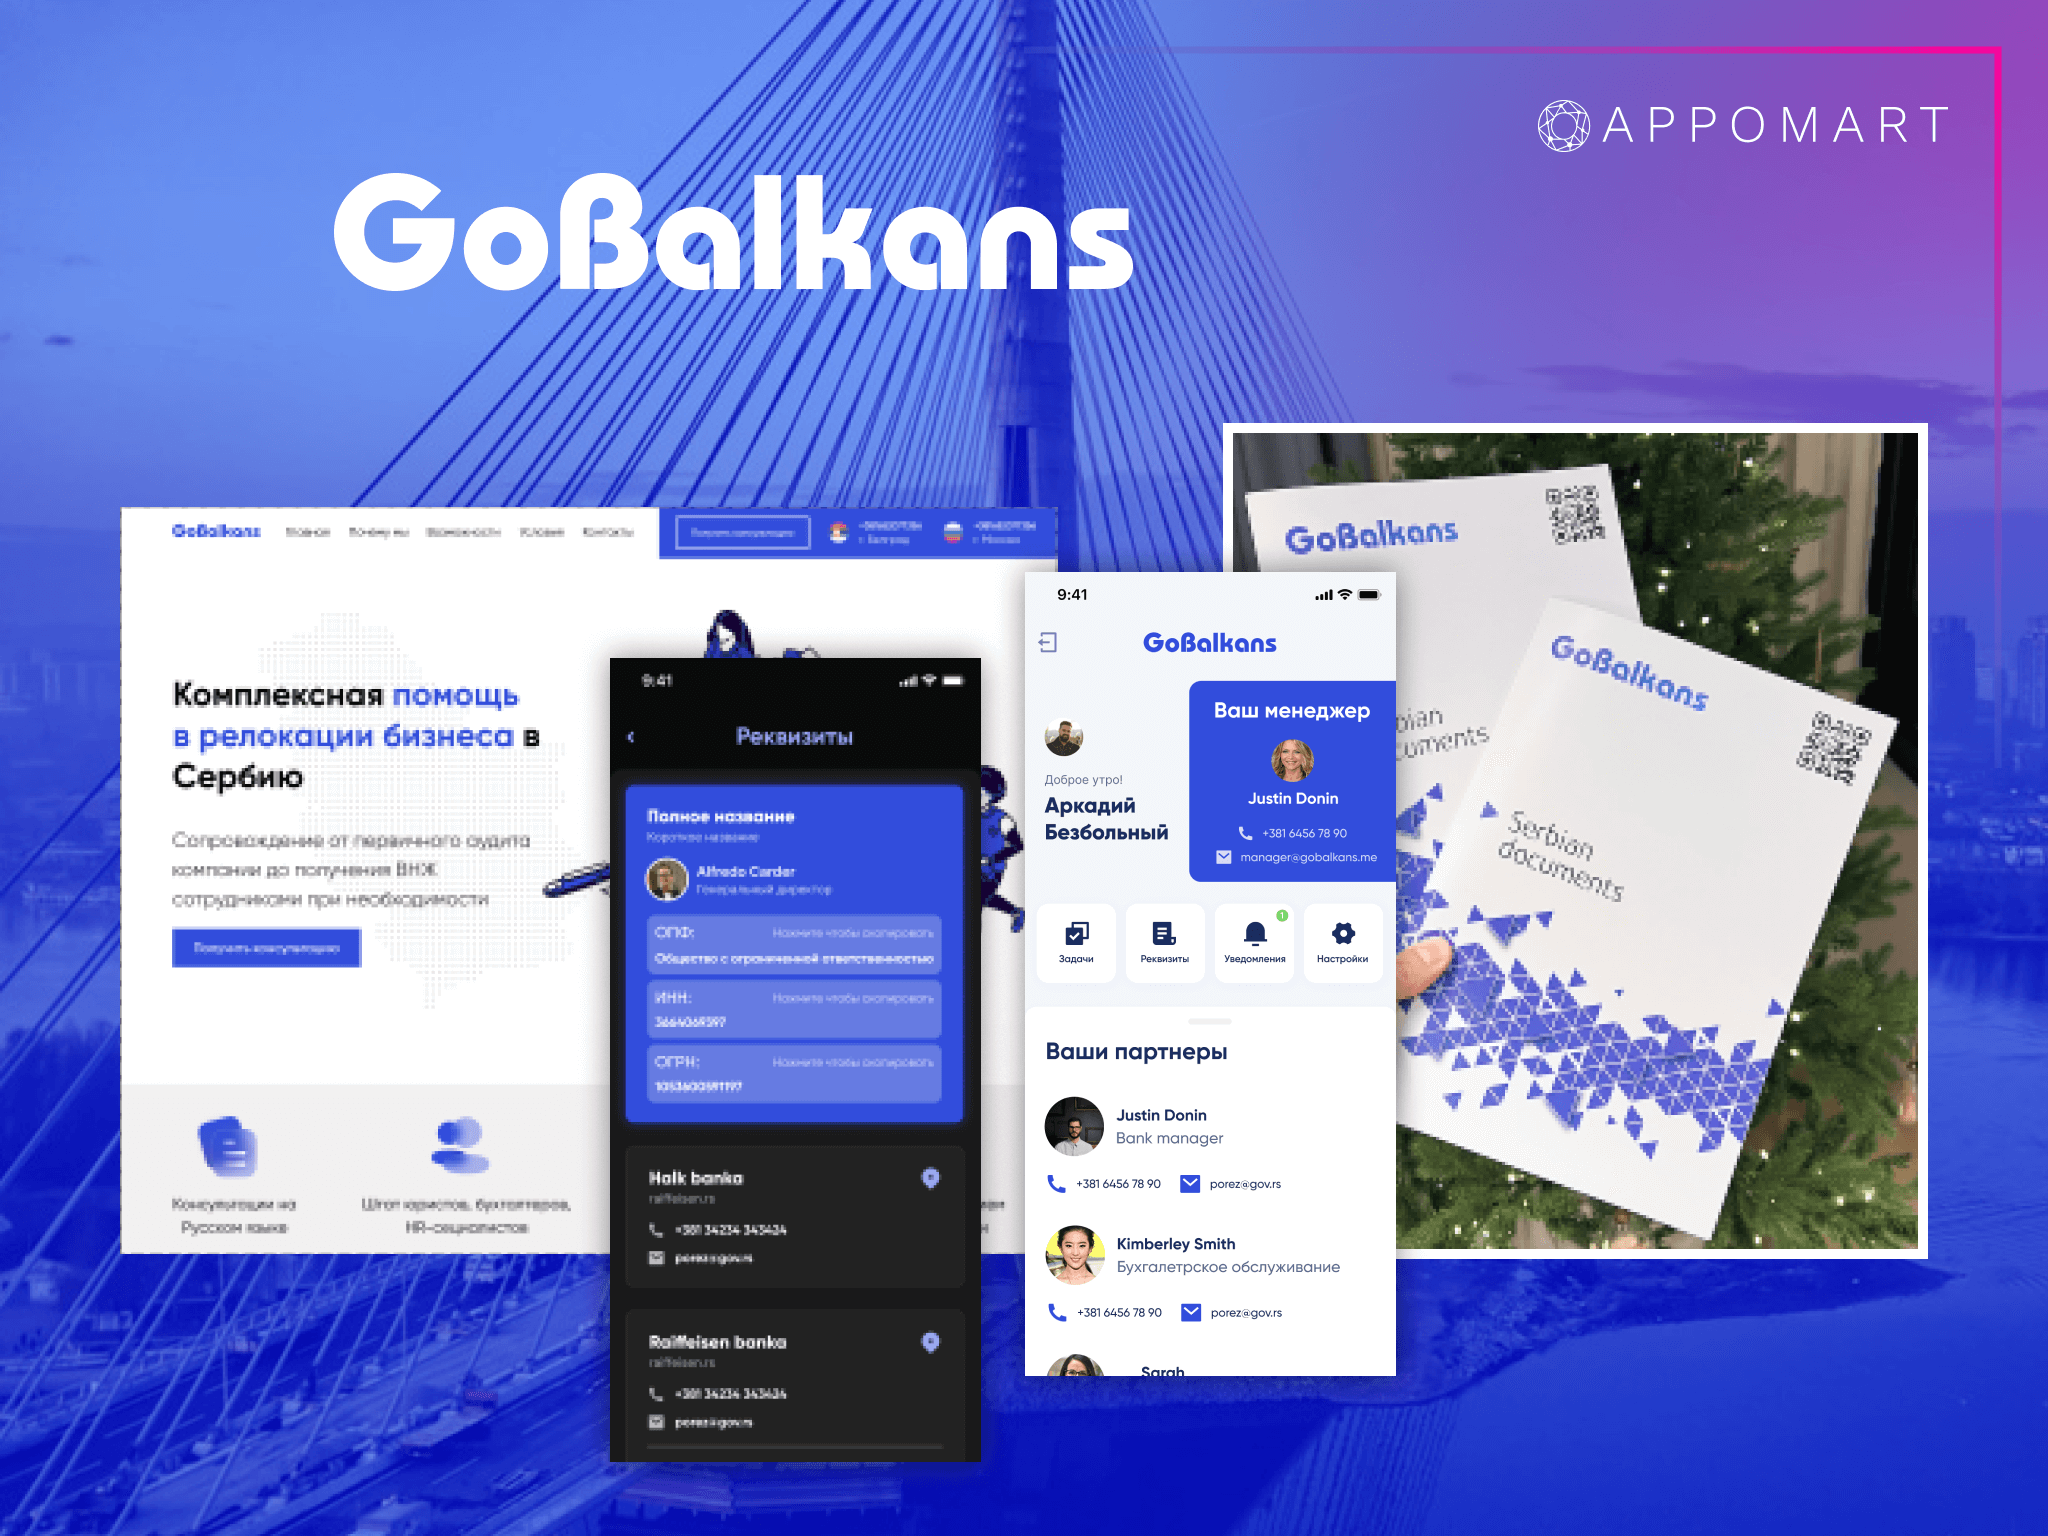 GoBalkans App Release by Appomart